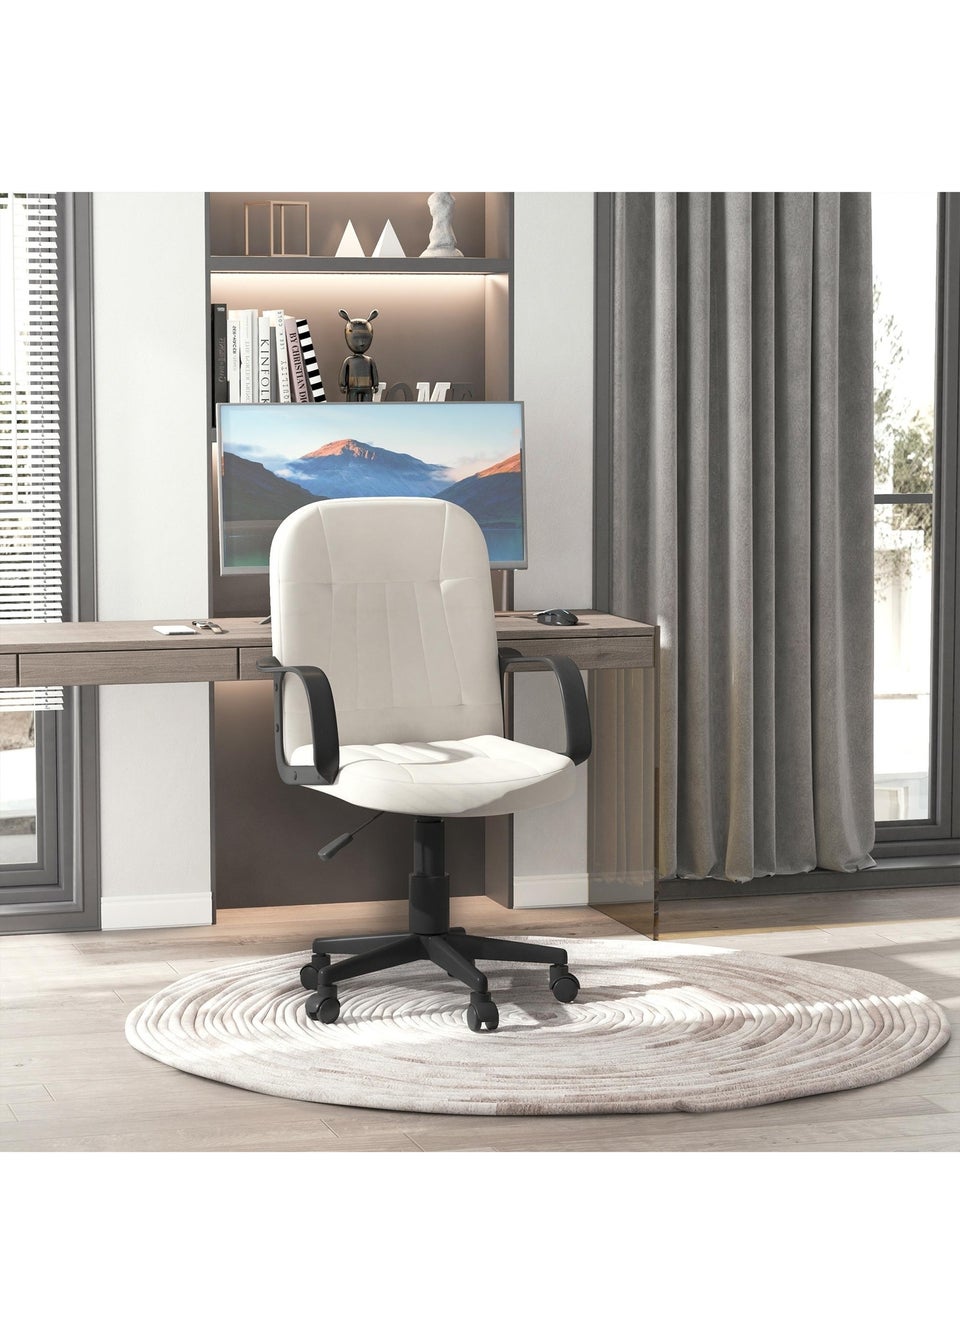 HOMCOM Cream PU Leather Swivel Office Chair (59.5cm x 60cm x 104cm)